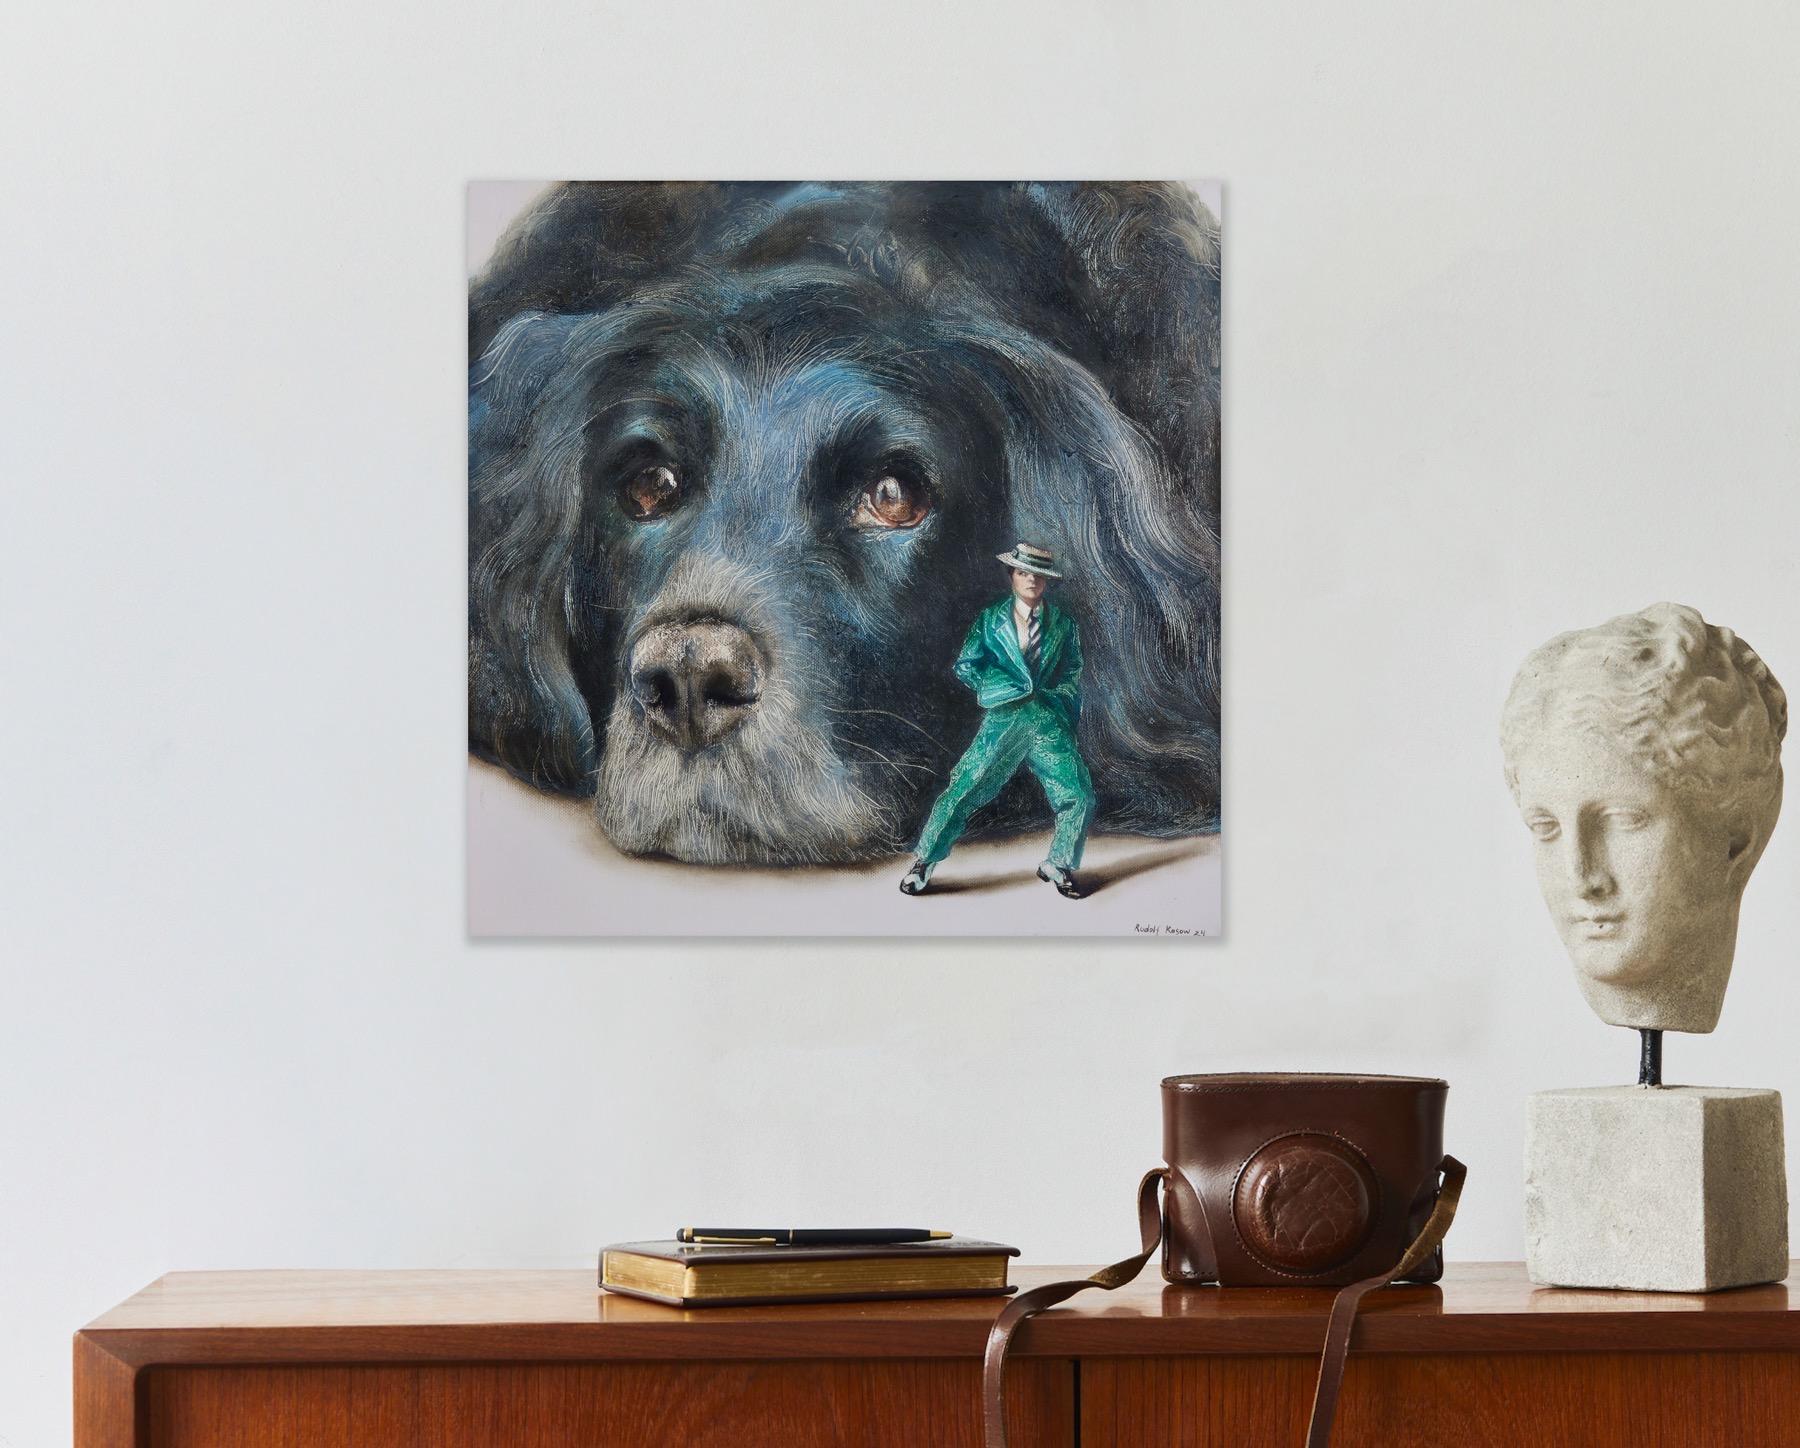 Moody (black dog, hat man, green vintage suit, animal, surrealist oil painting) For Sale 6